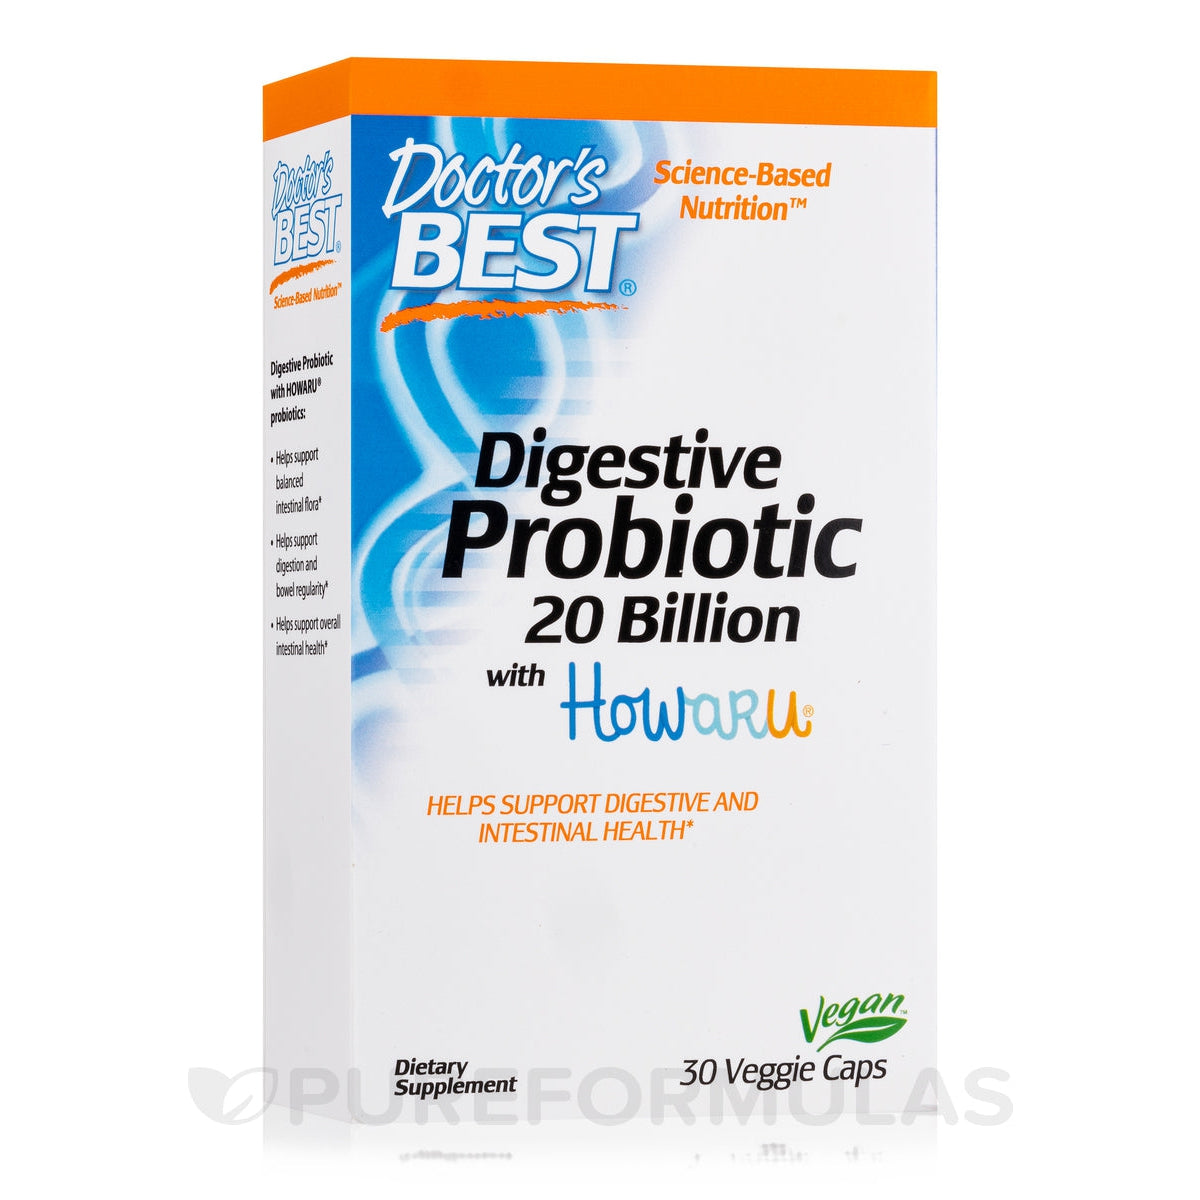 Digestive Probiotic with Howaru - Doctor's Best